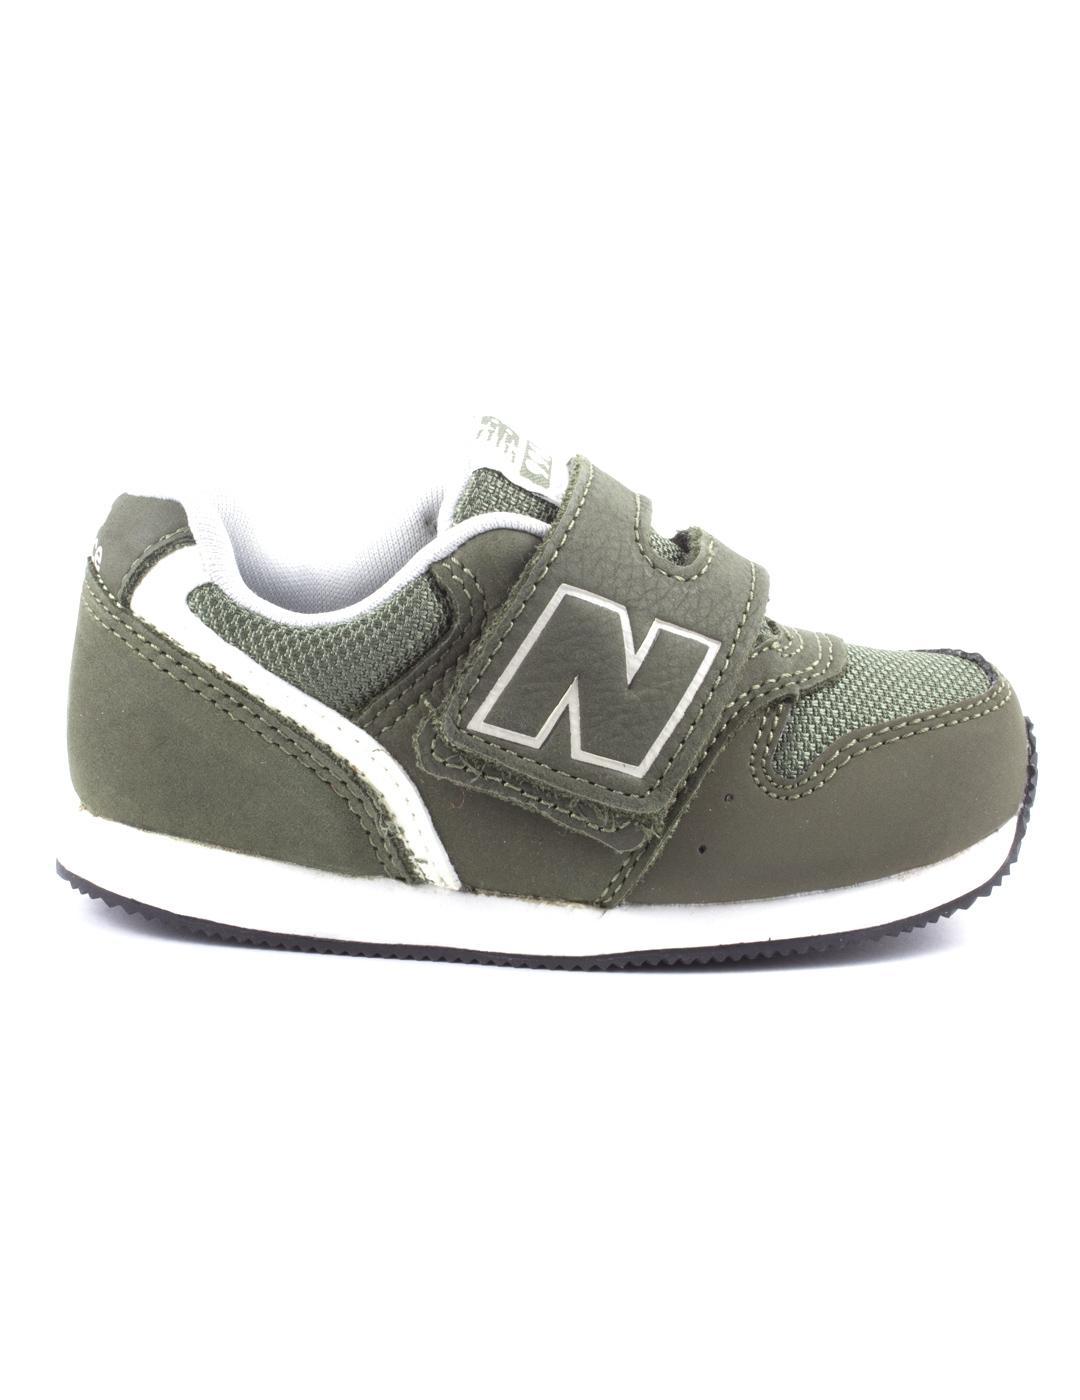 Zapatillas de Niño New Balance FS996NKI VERDE